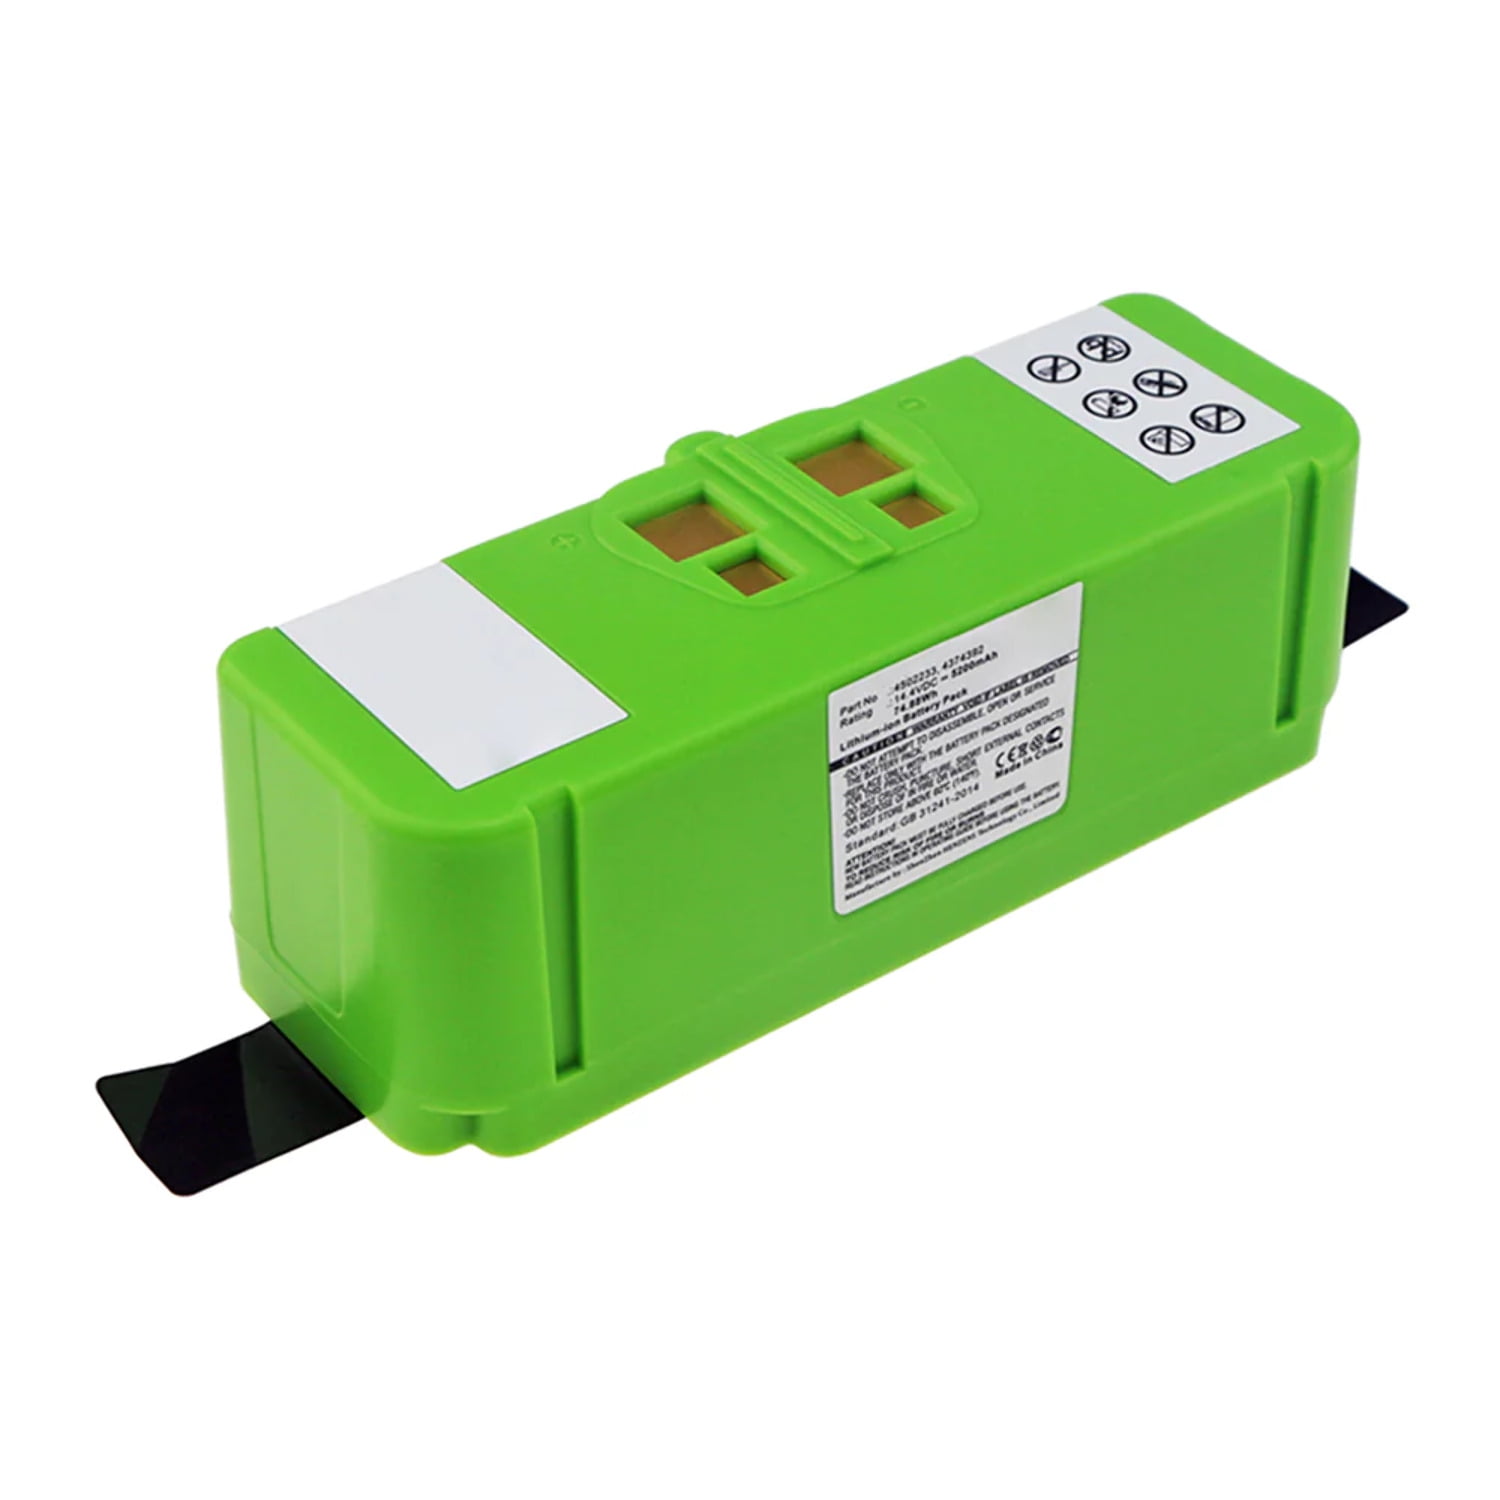 Batteries N Accessories BNA-WB-L12888 Vacuum Cleaner Battery - Li-ion, 14.4V, 5200mAh, Ultra High Capacity - Replacement for iRobot 4374392 Battery Walmart.com